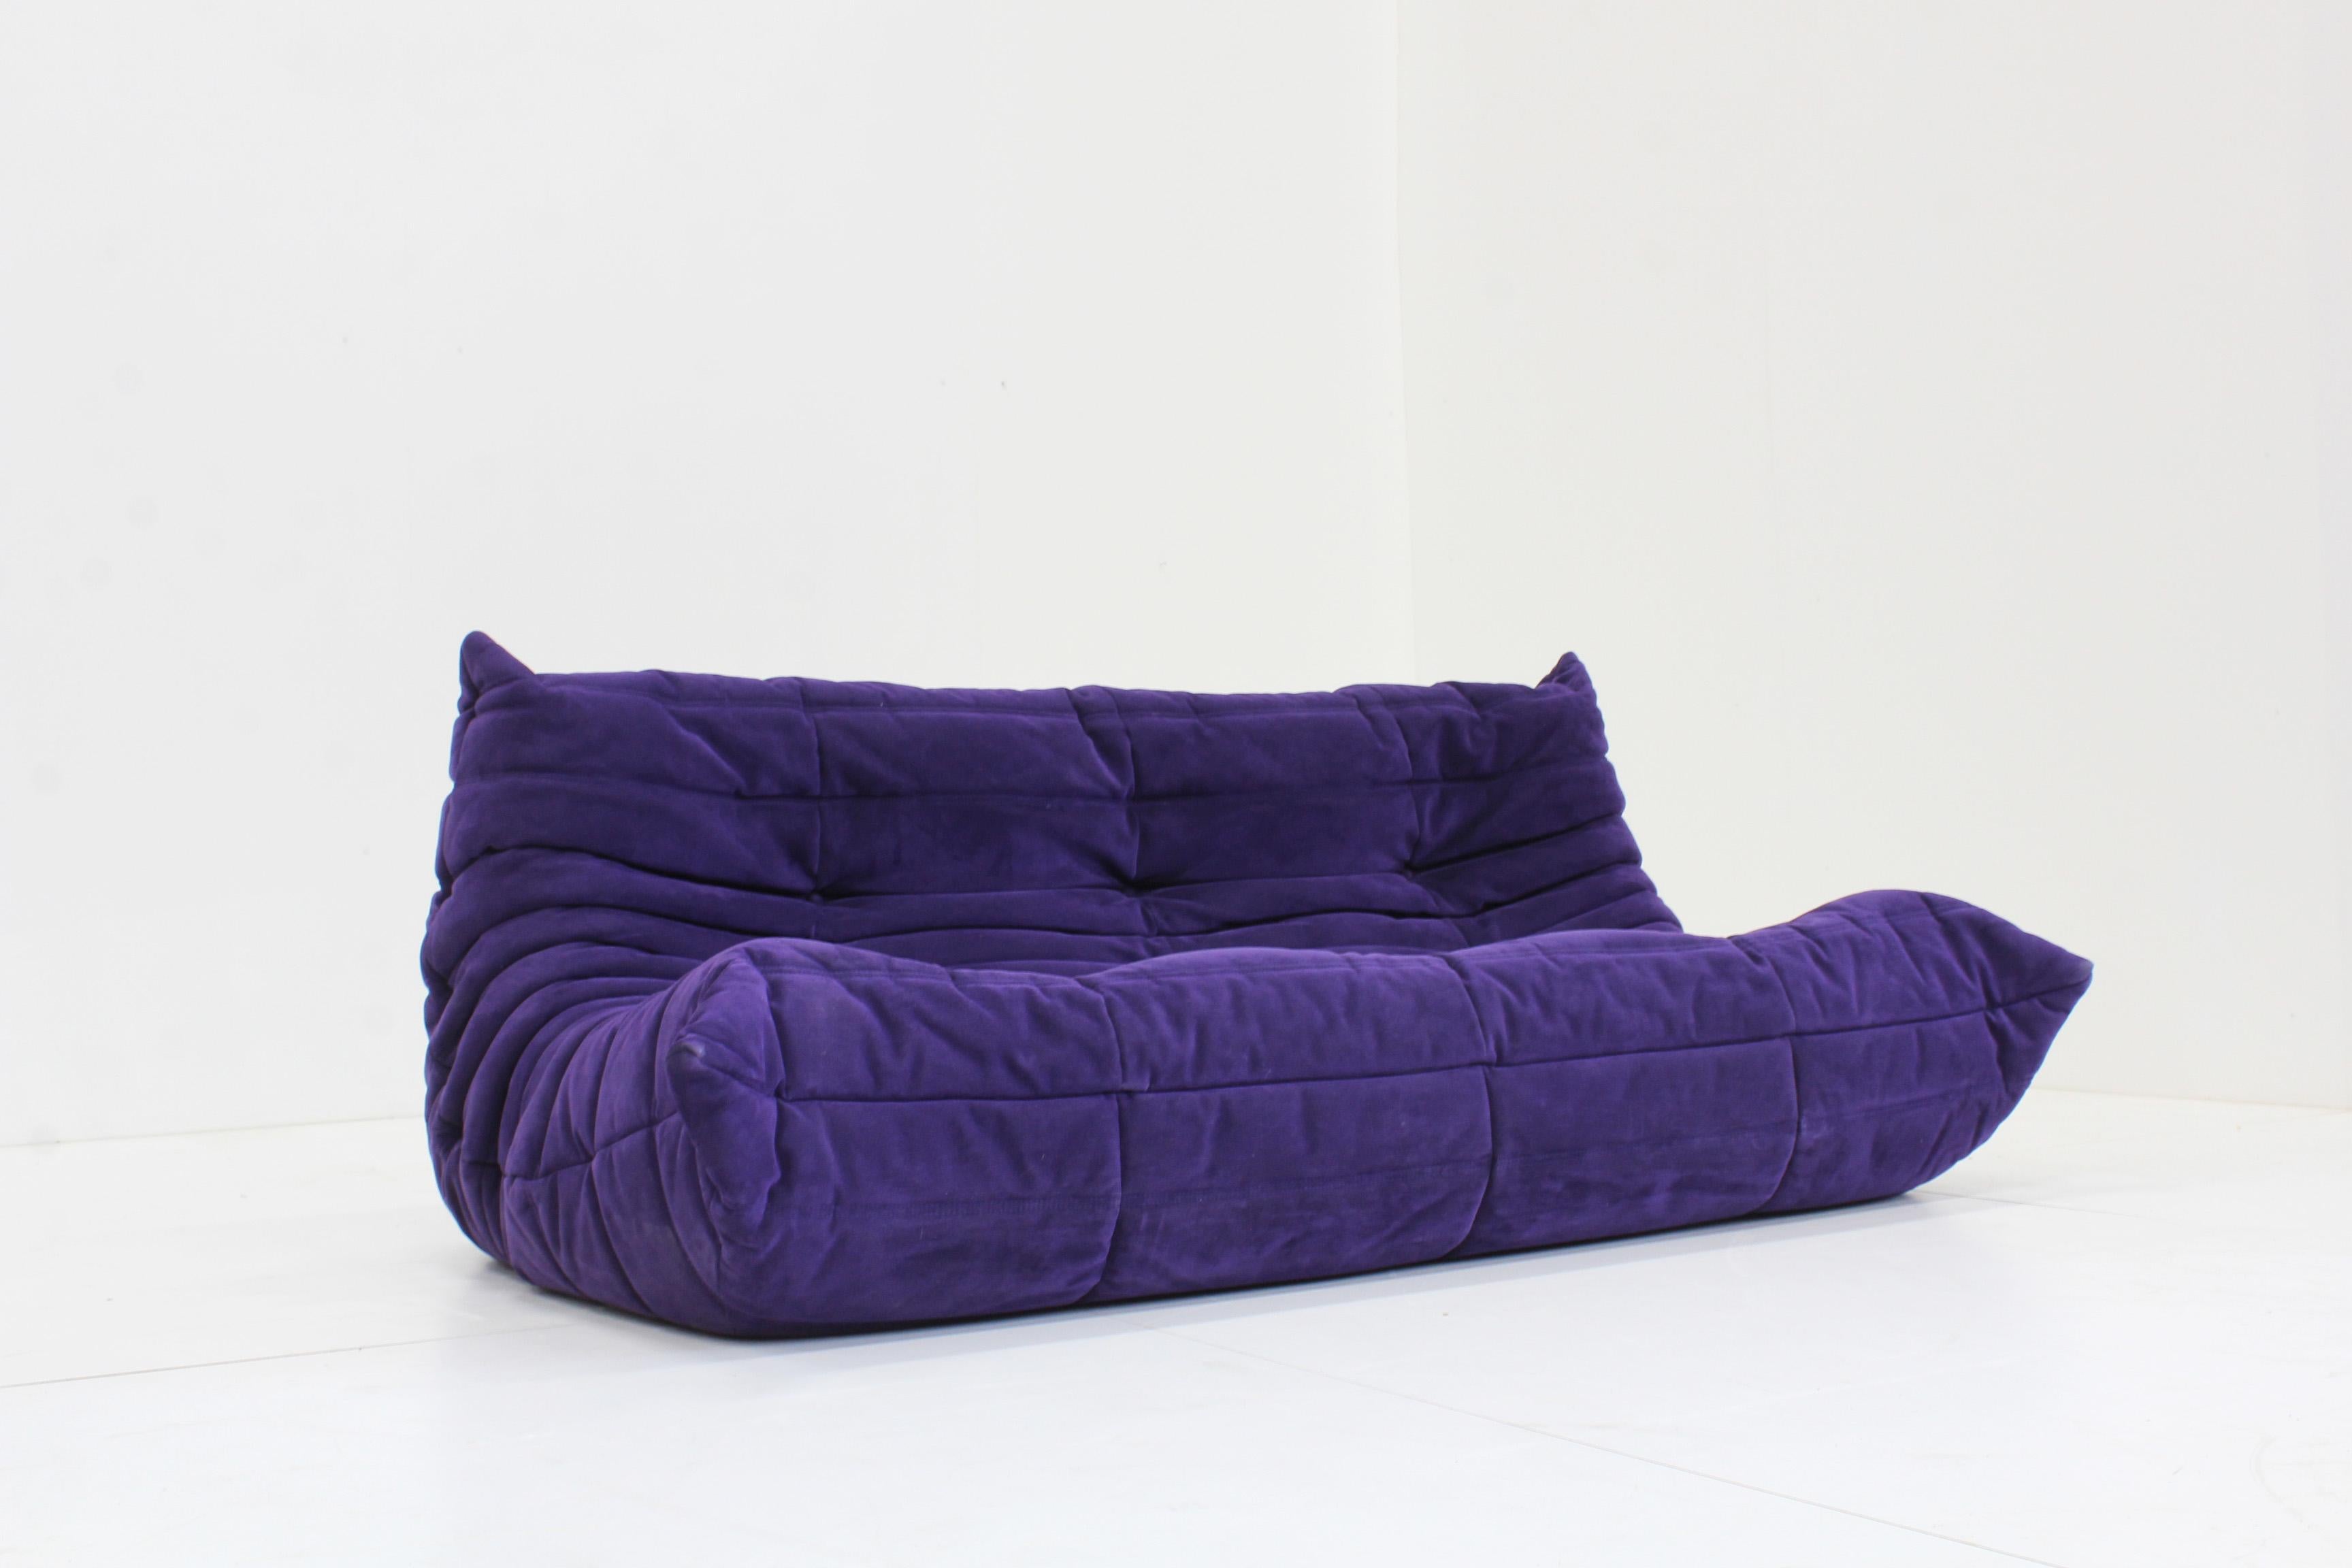 Original Vintage Togo ligne Roset 3 seater sofa purple alacantra  1